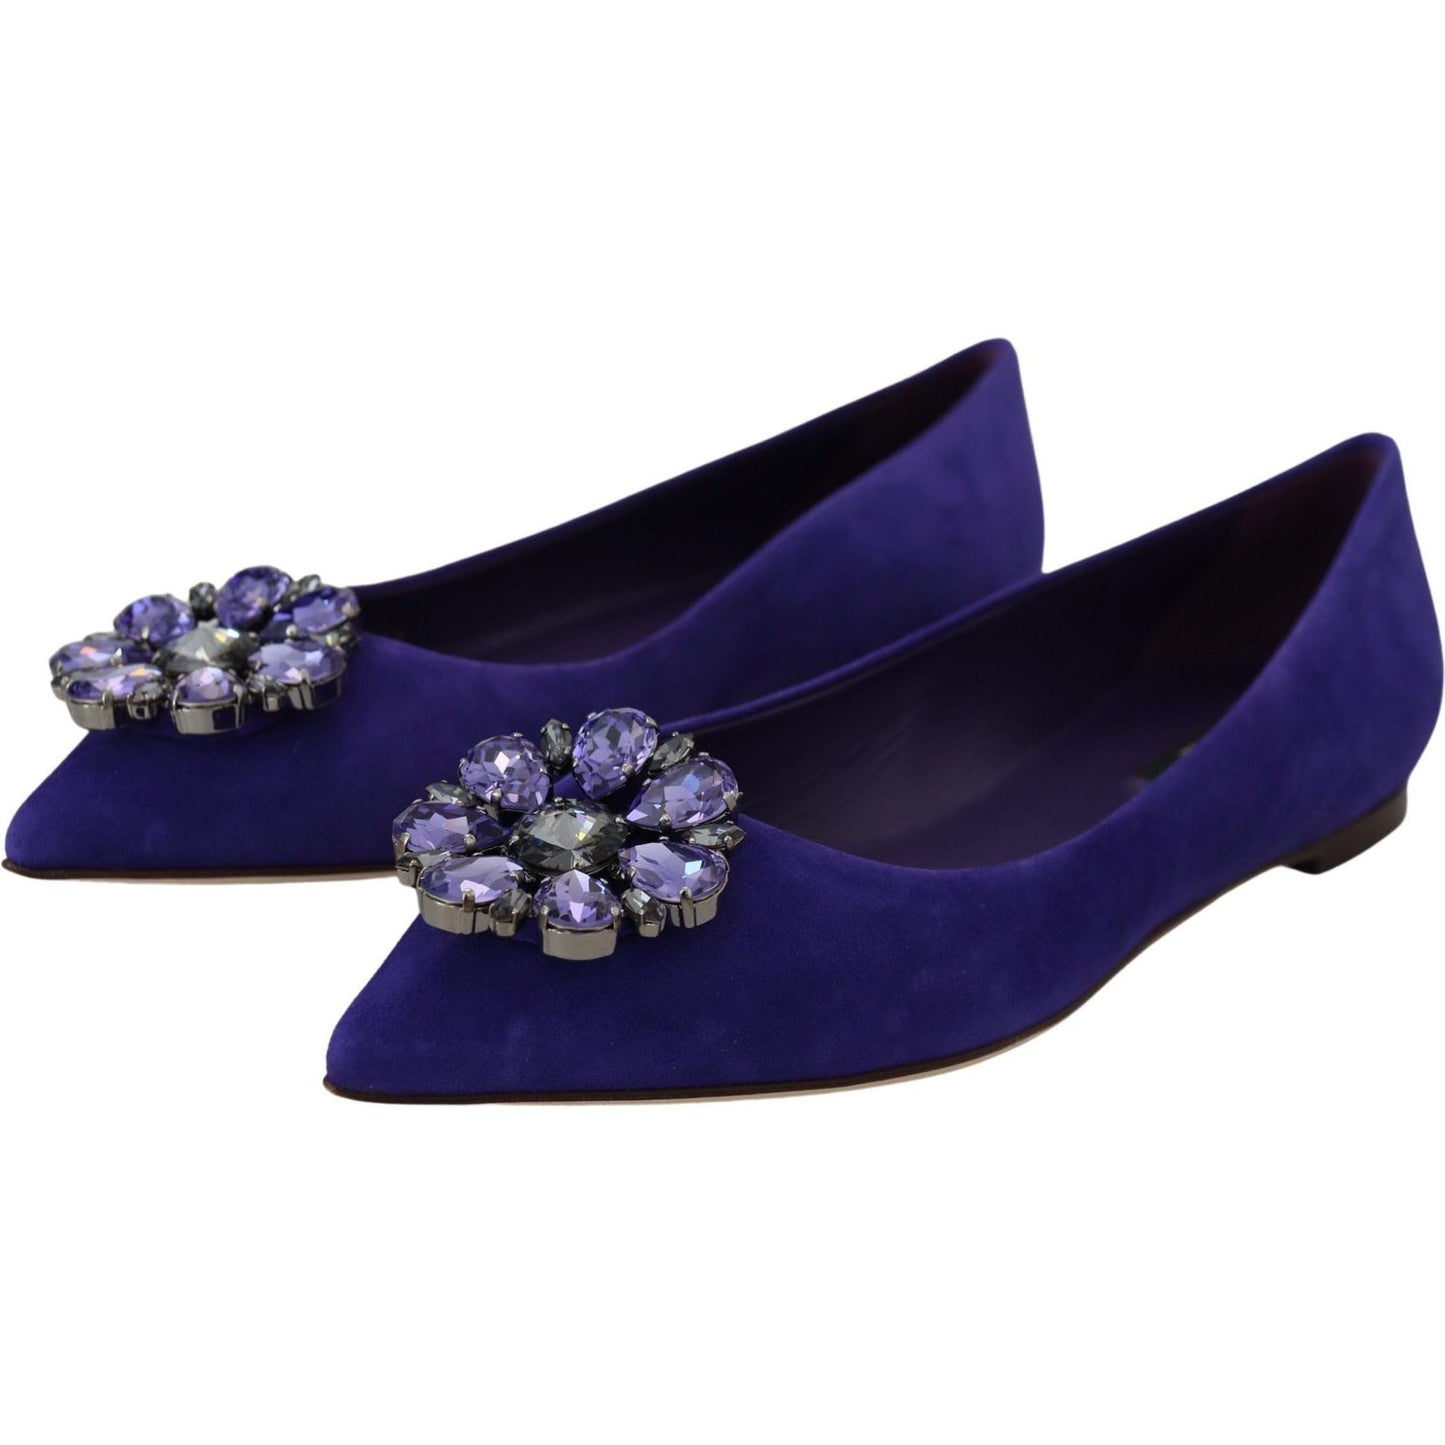 Dolce & Gabbana Embellished Crystal Purple Suede Flats purple-suede-crystals-loafers-flats-shoes IMG_8915-scaled-b6aa99d3-9ef.jpg